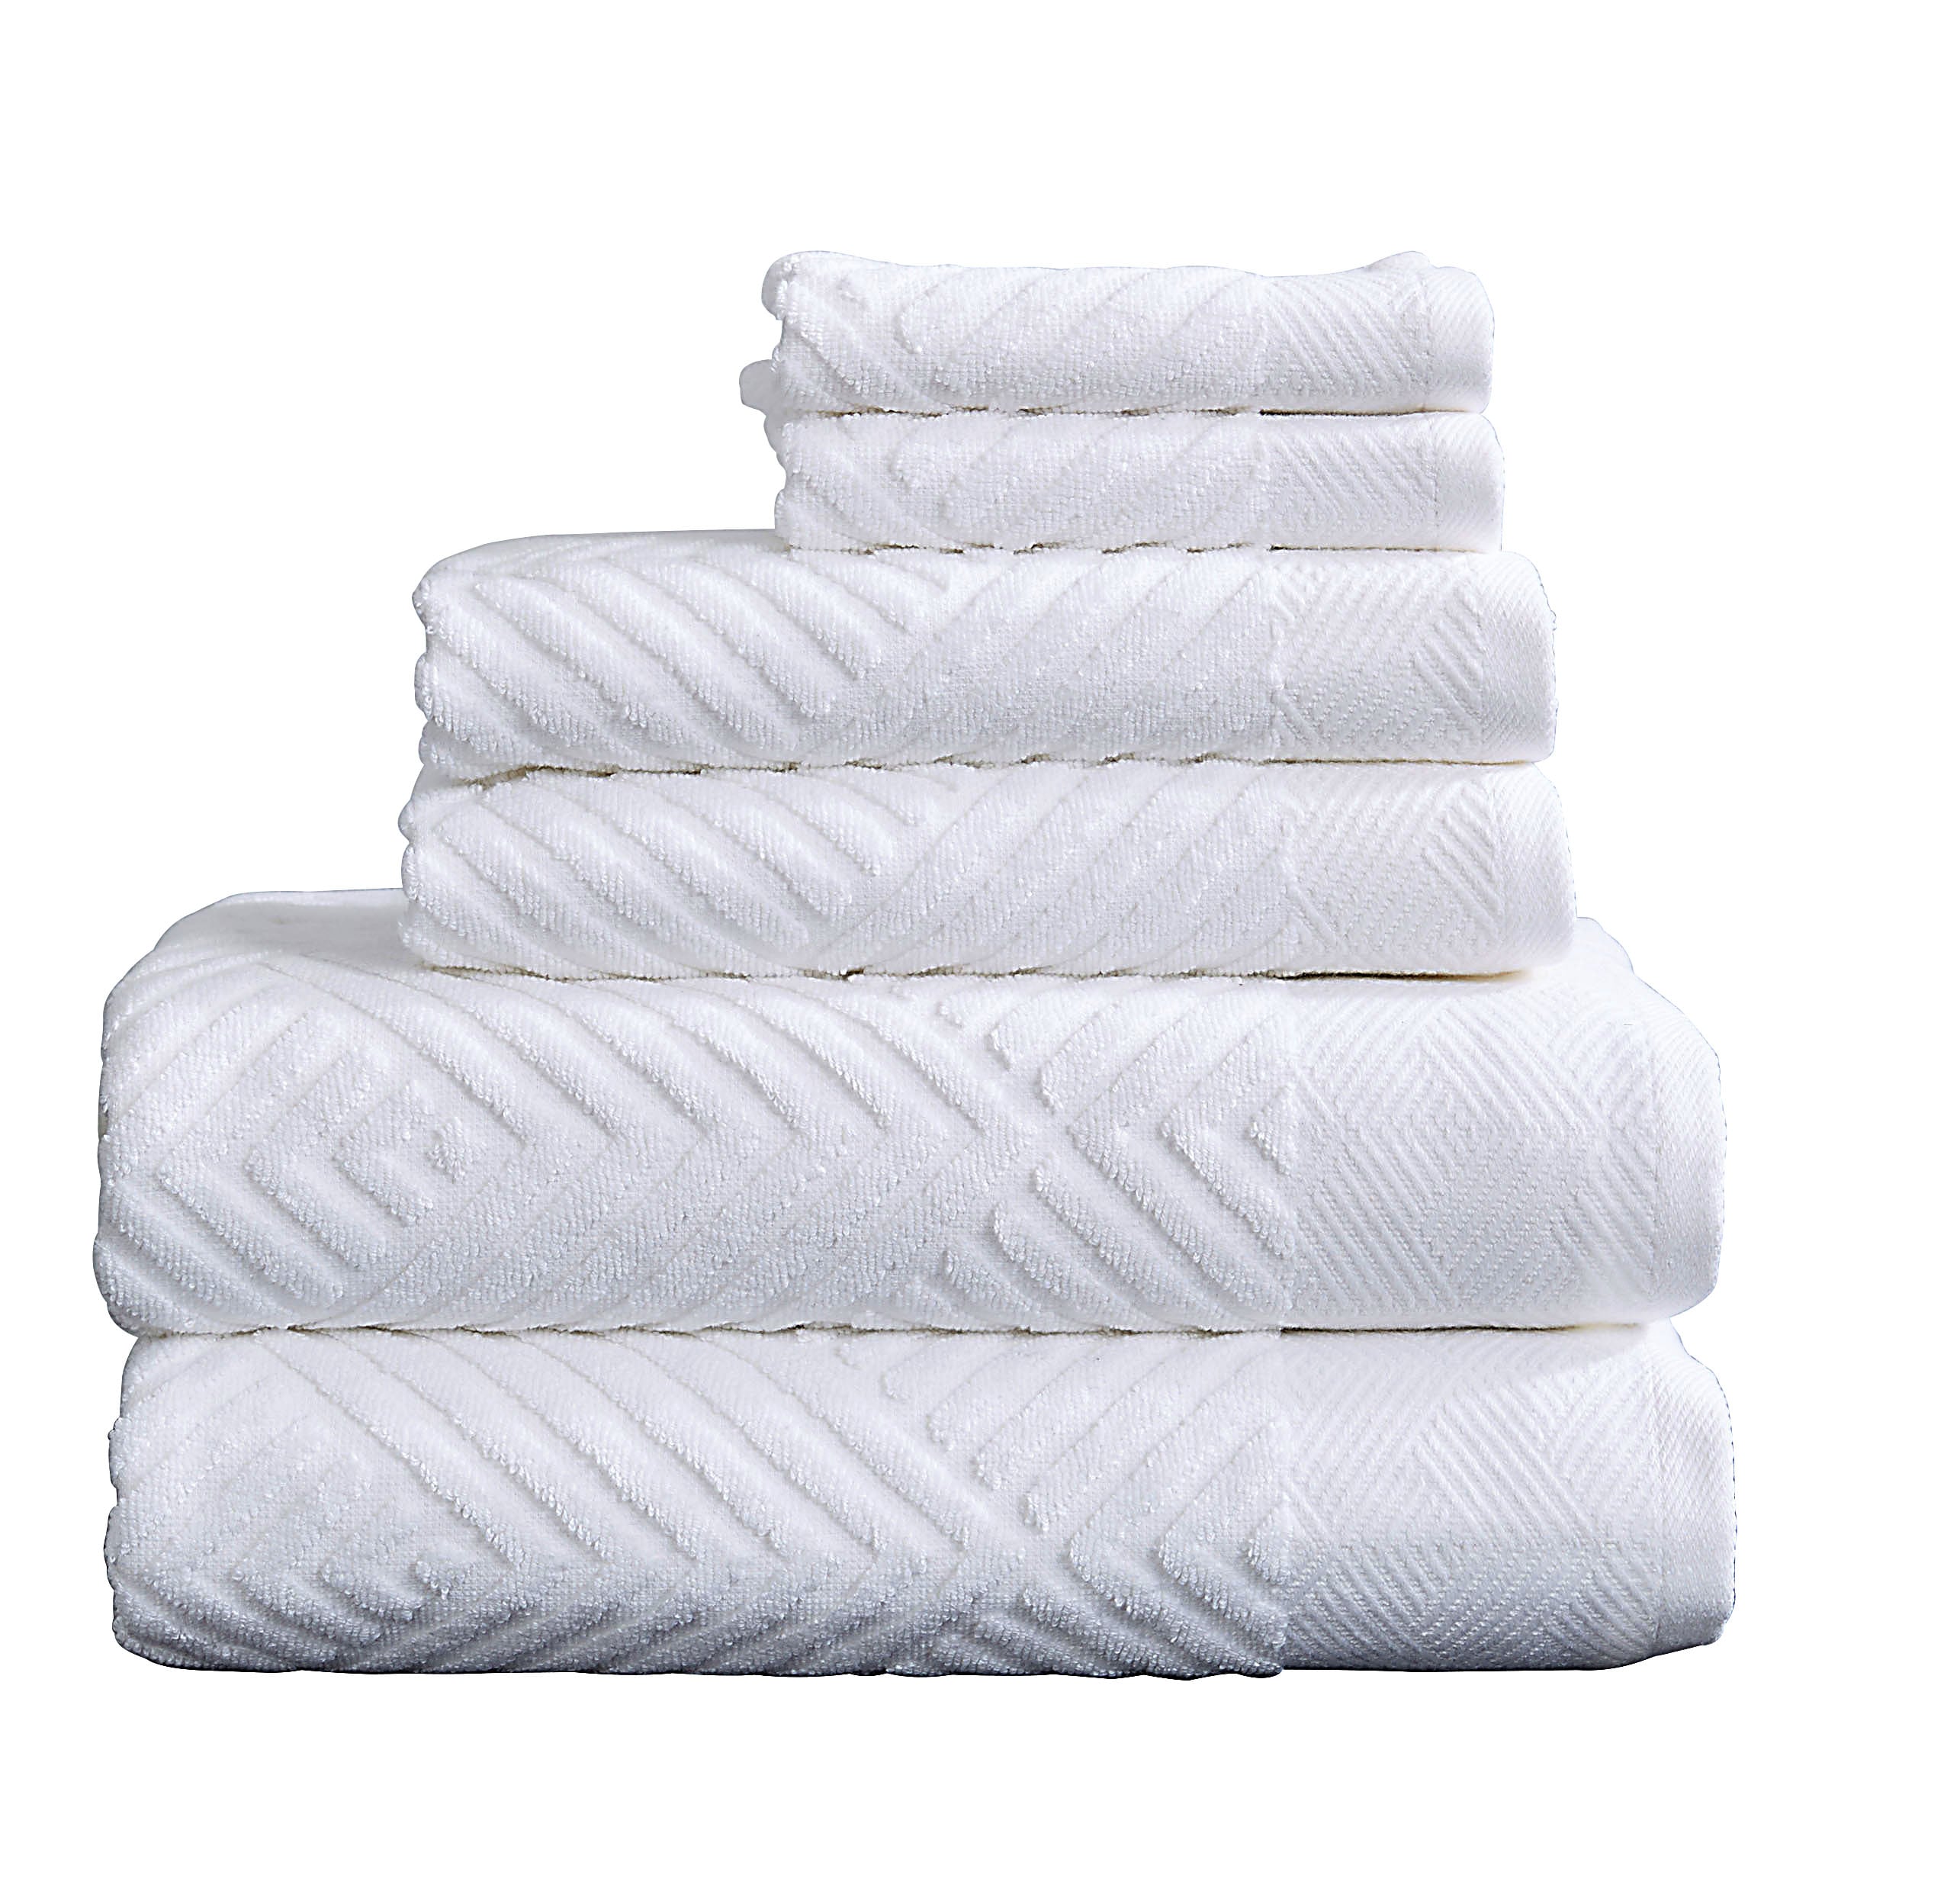 NY Loft 6-Piece Bright White Cotton Quick Dry Bath Towel Set at